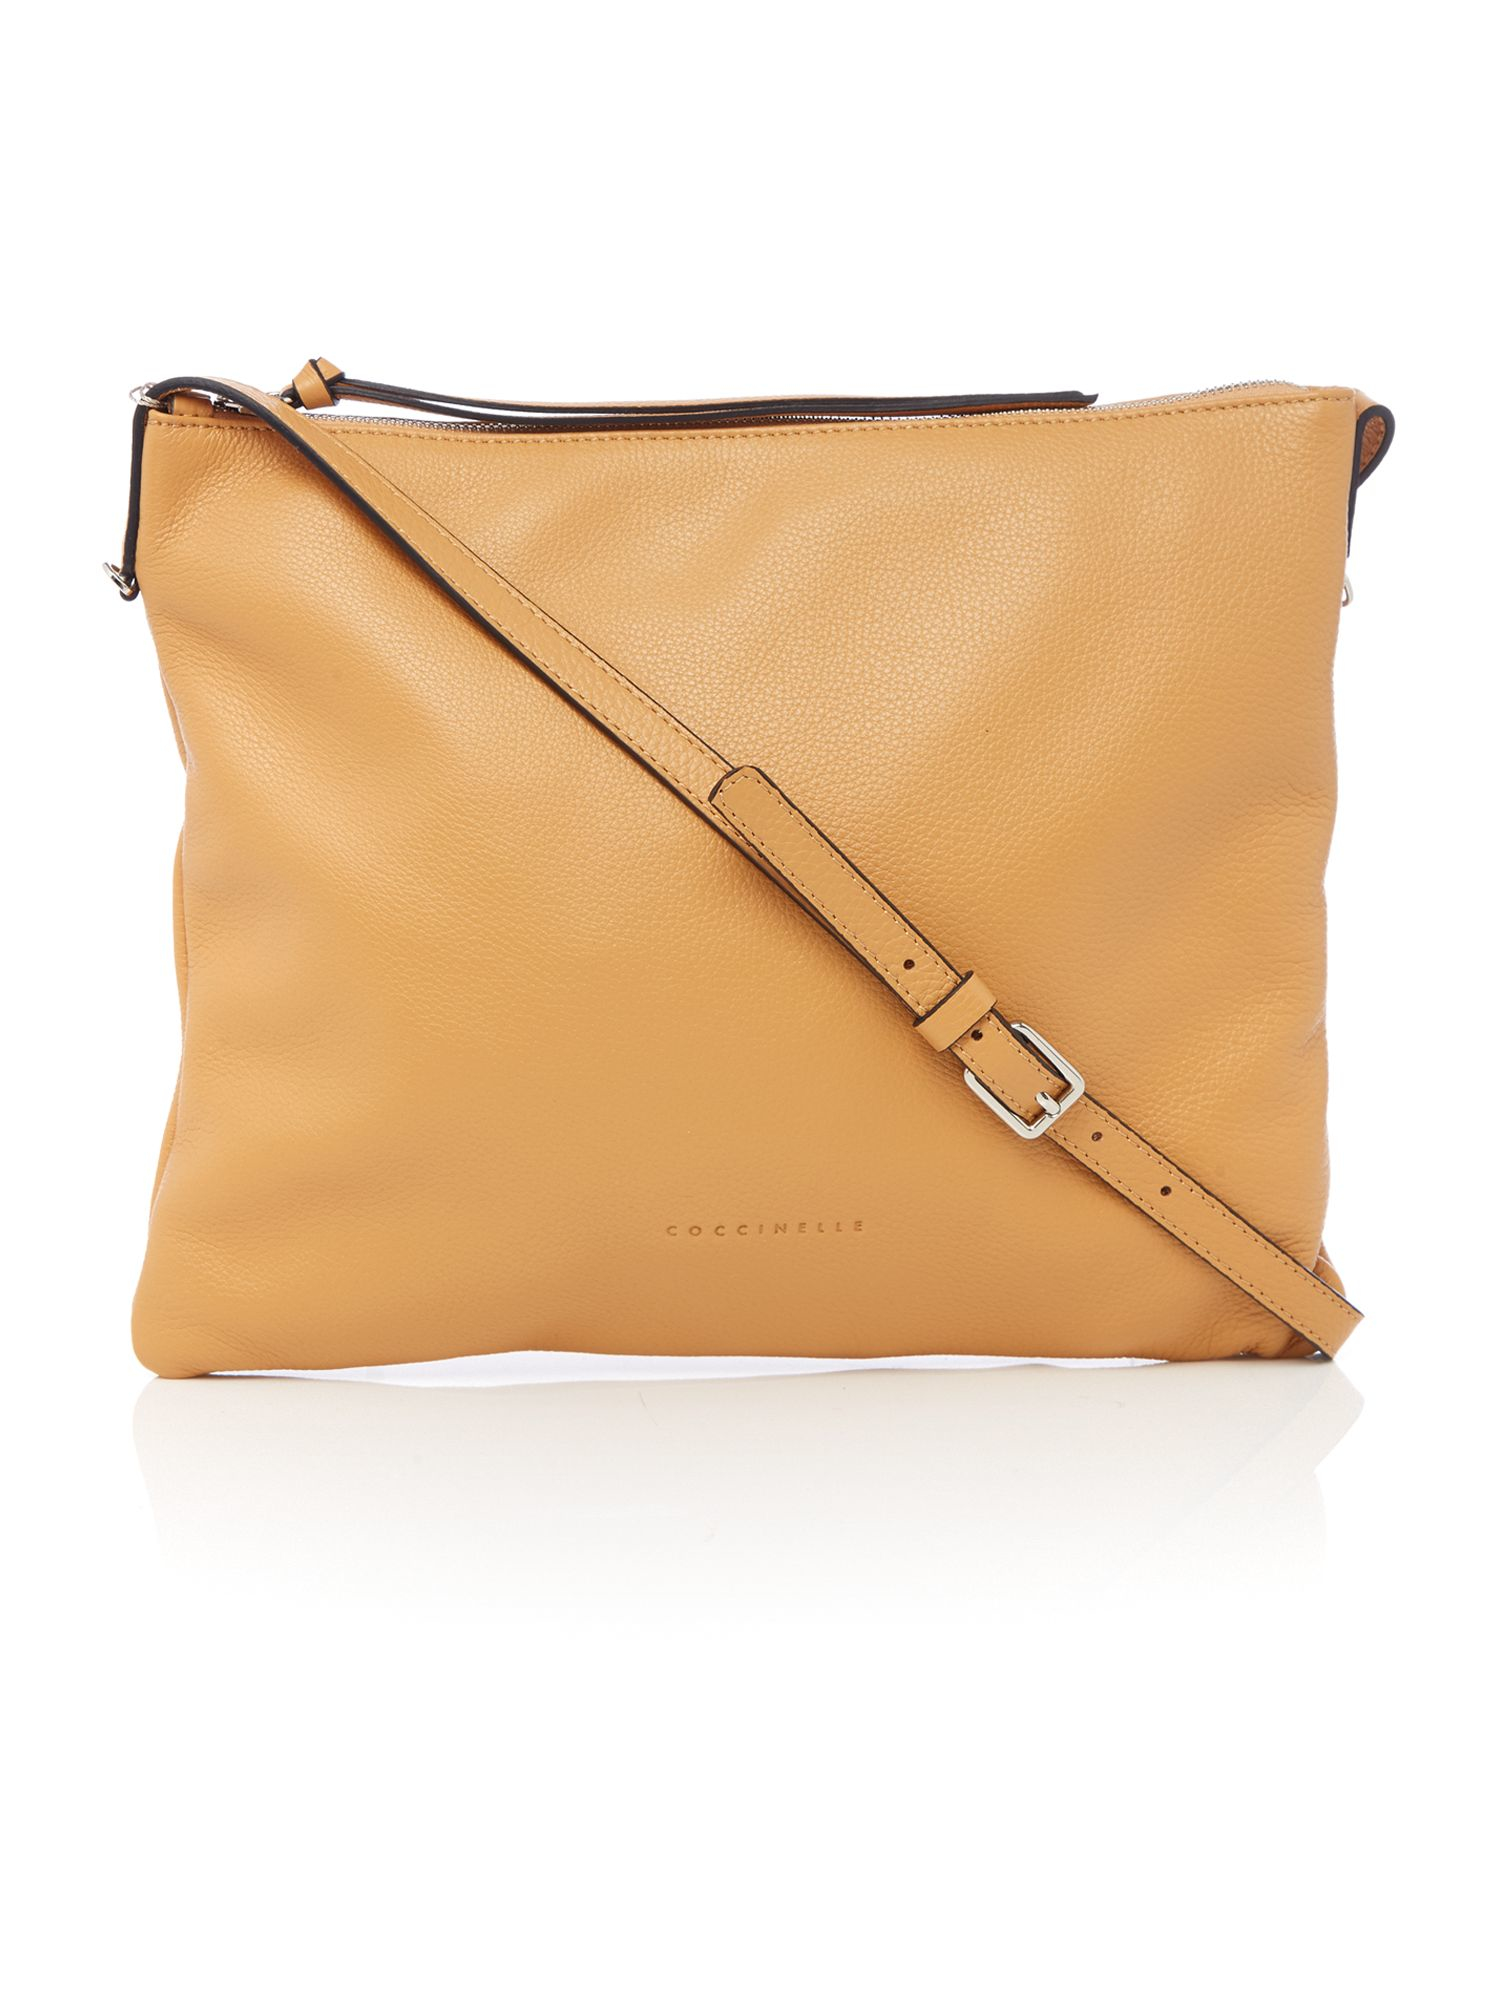 Coccinelle Mila Tan Medium Cross Body Bag in Brown (Tan) | Lyst